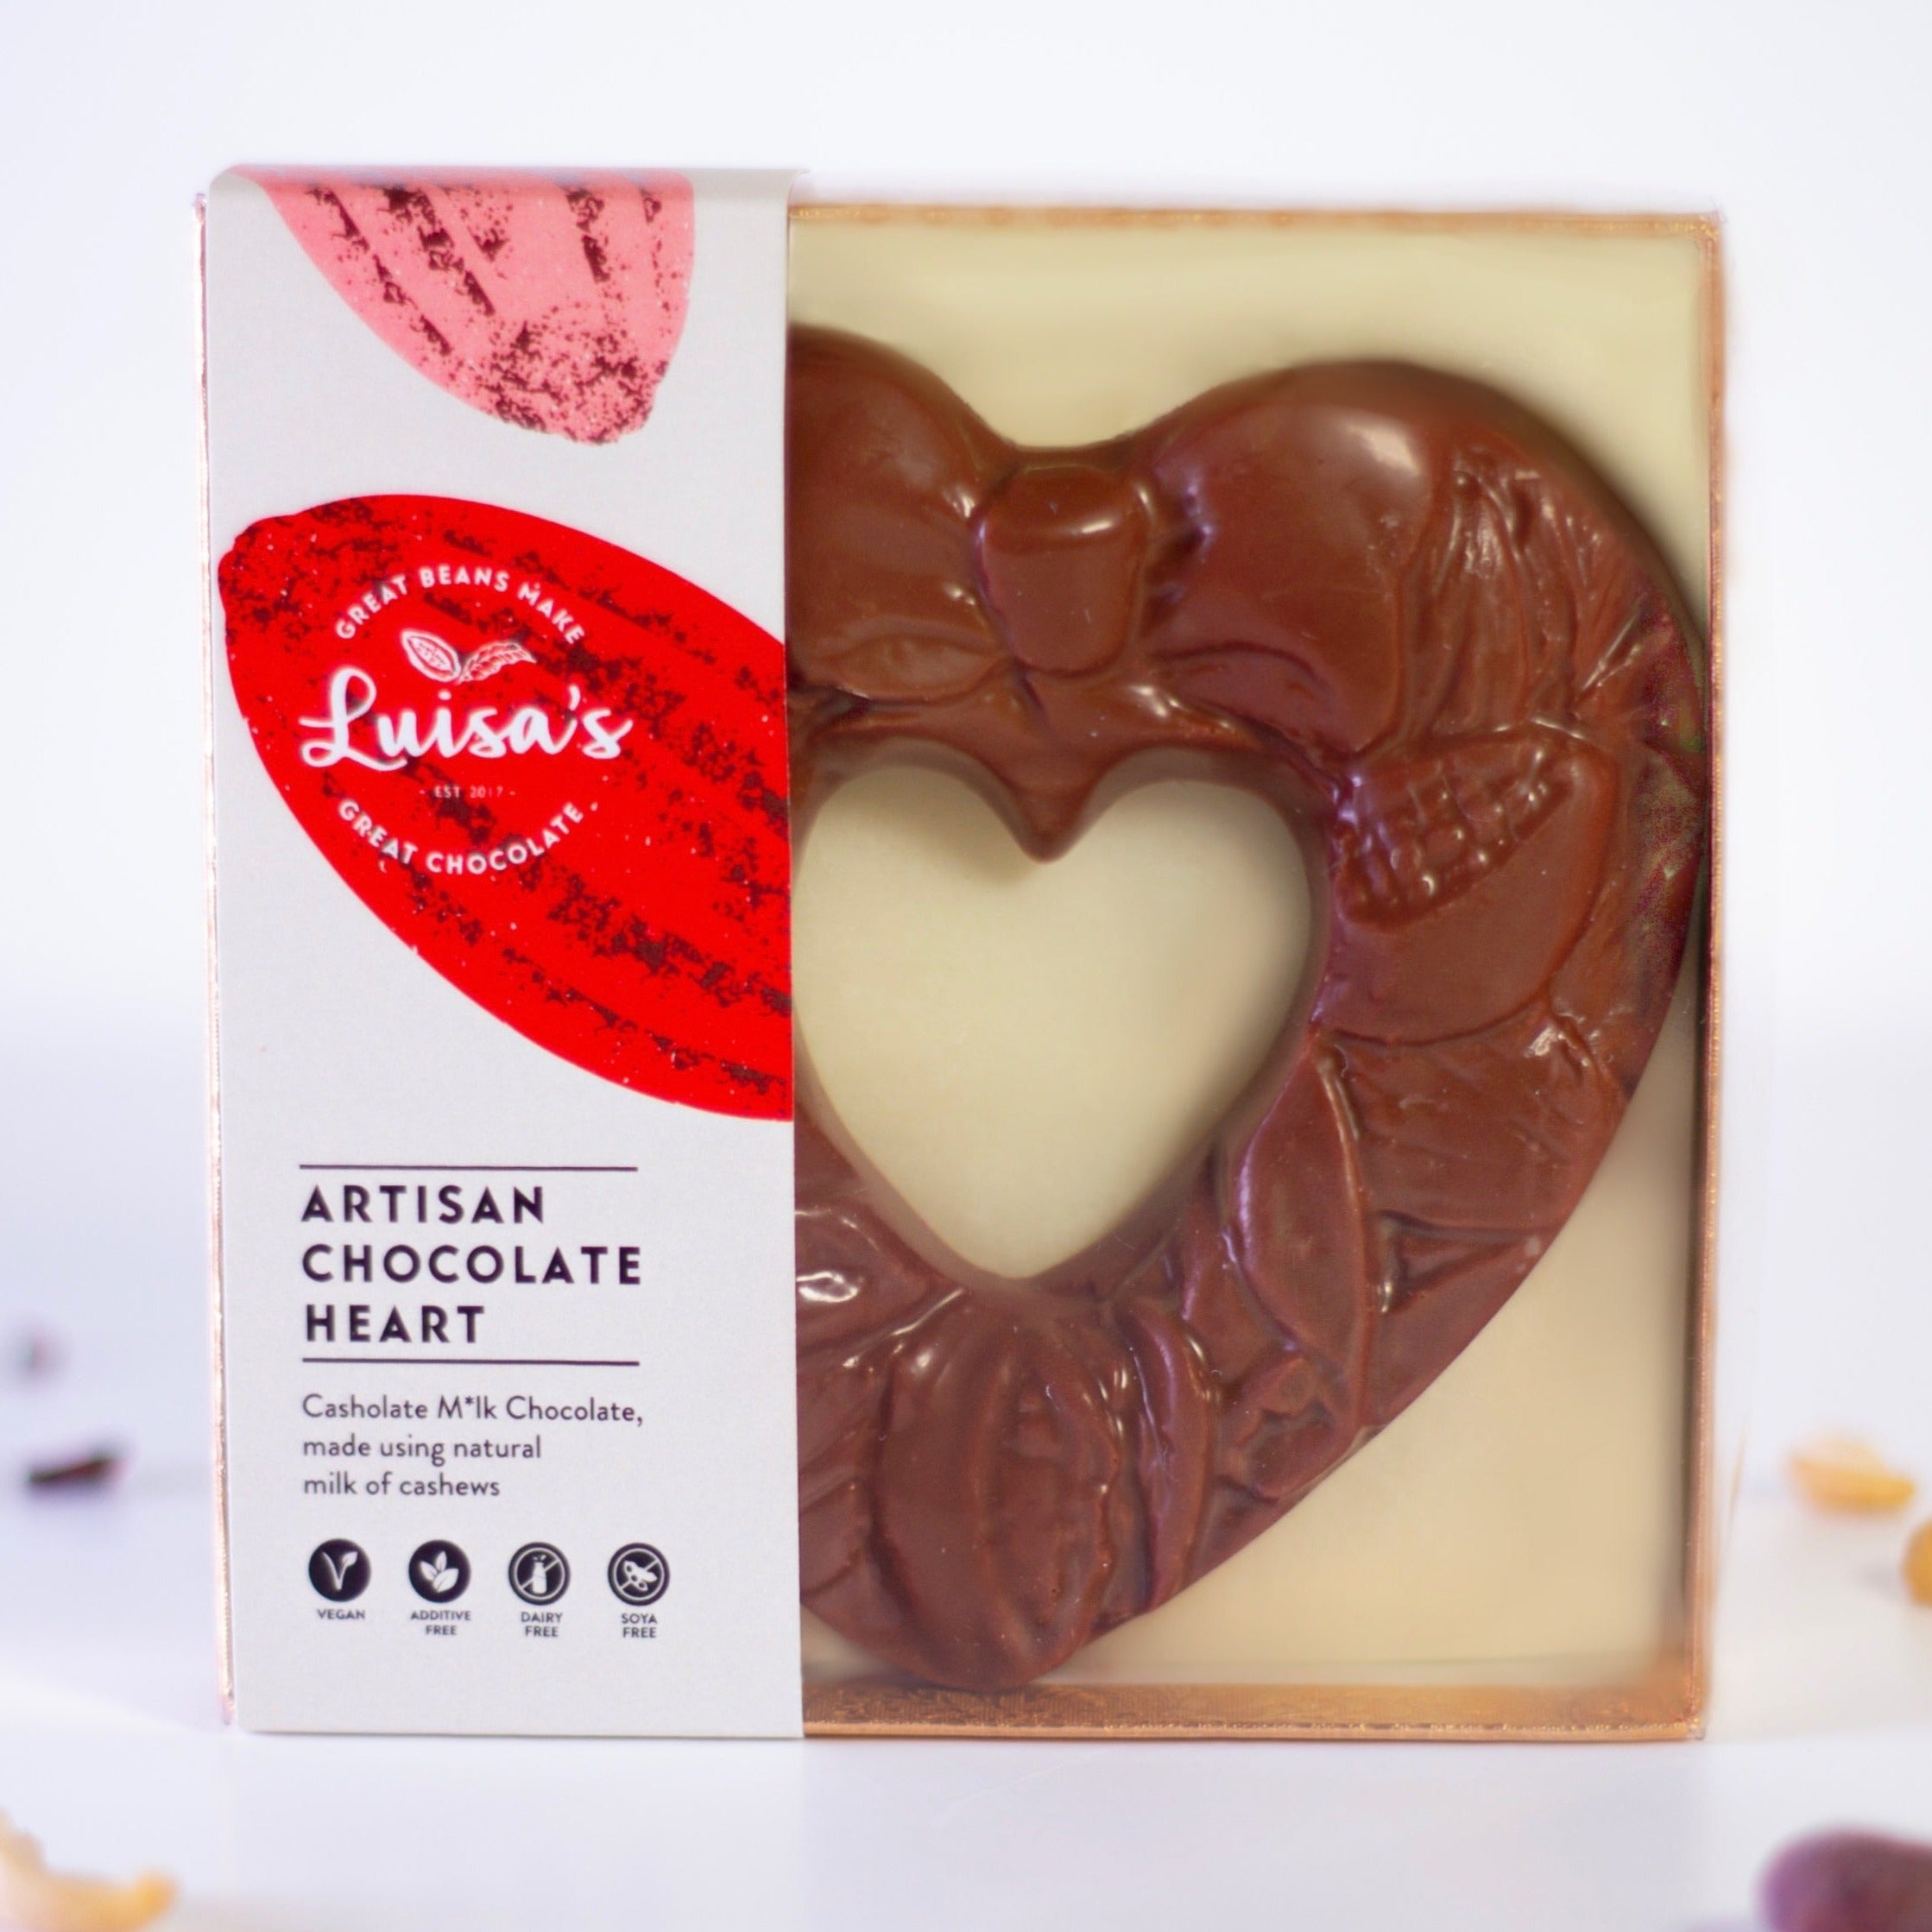 The M*lk Casholate Artisan Chocolate Heart